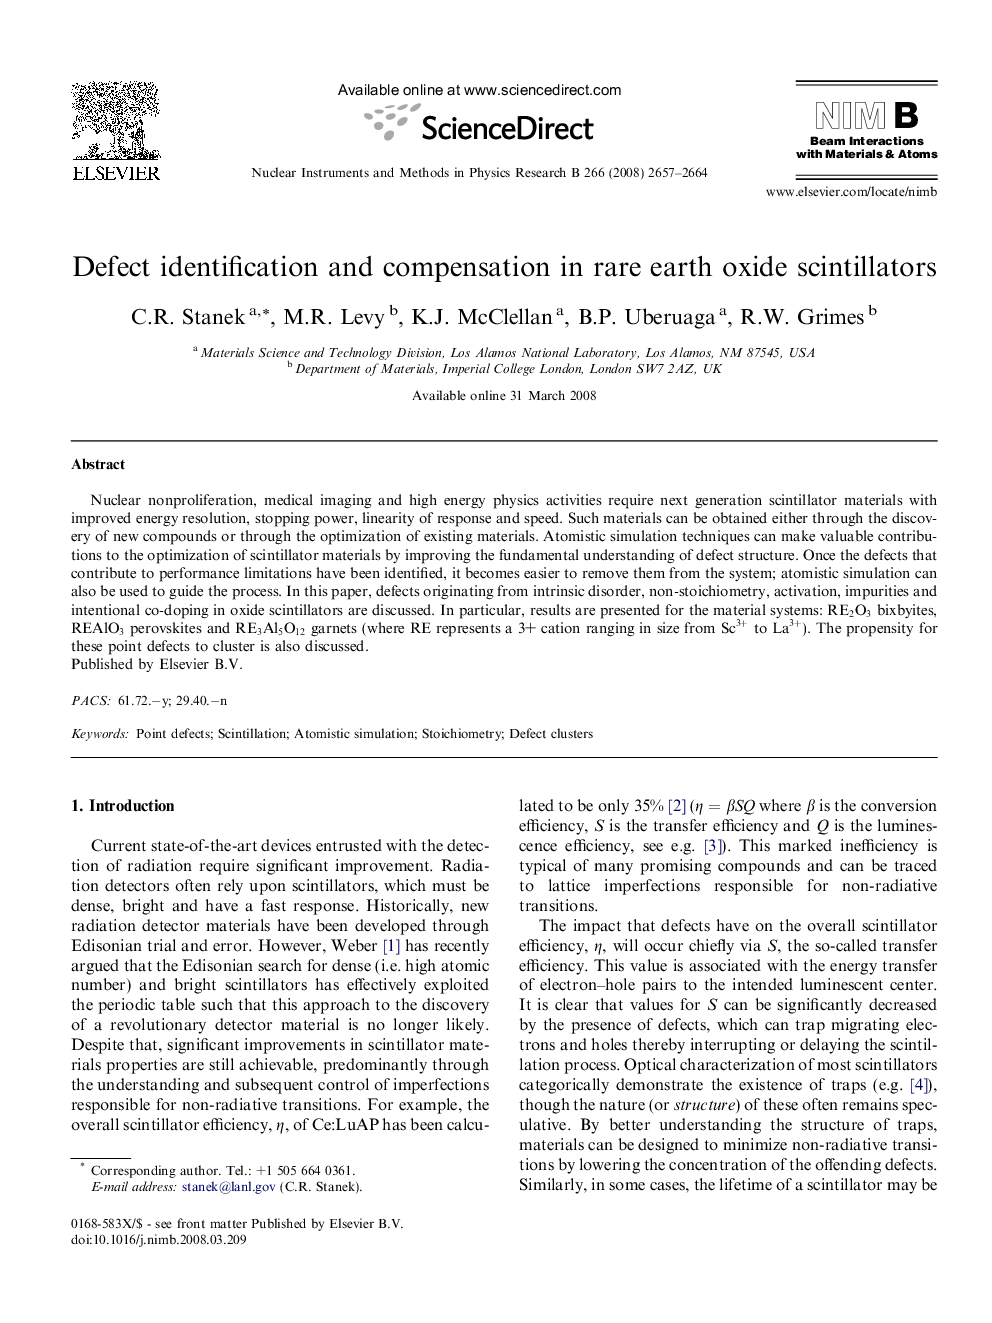 Defect identification and compensation in rare earth oxide scintillators